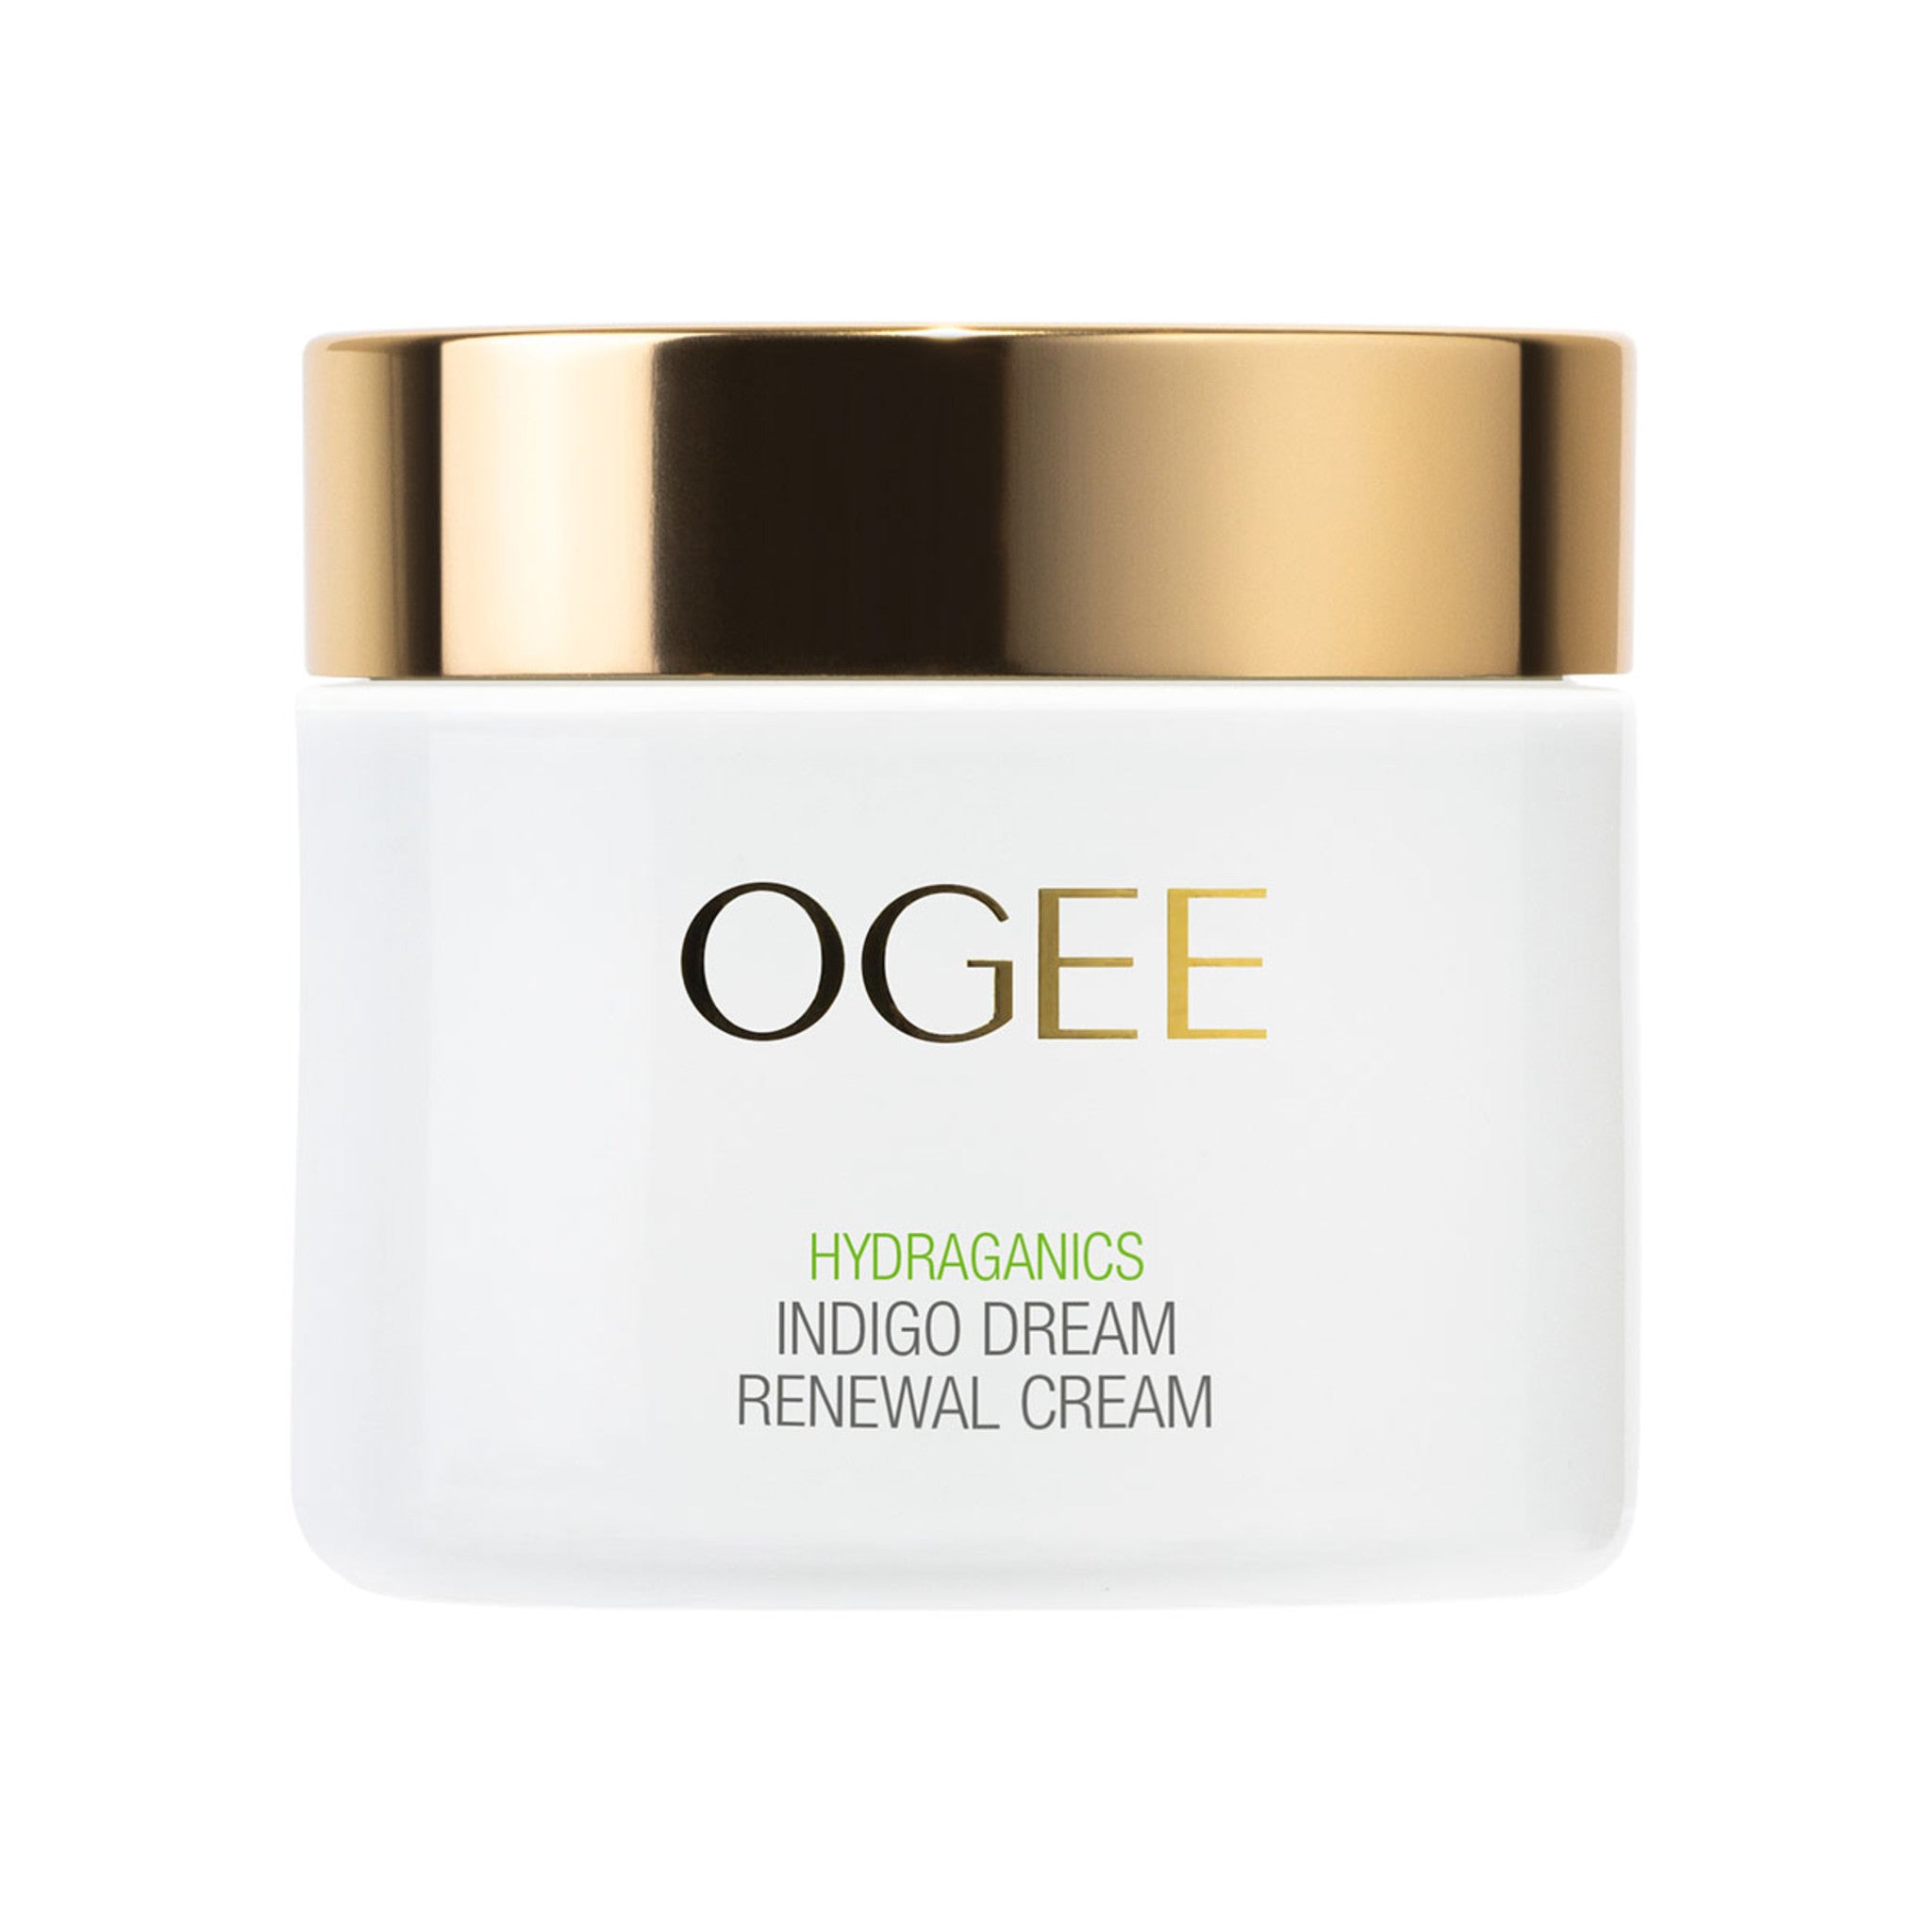 Ogee Indigo Dream Renewal Cream main image.